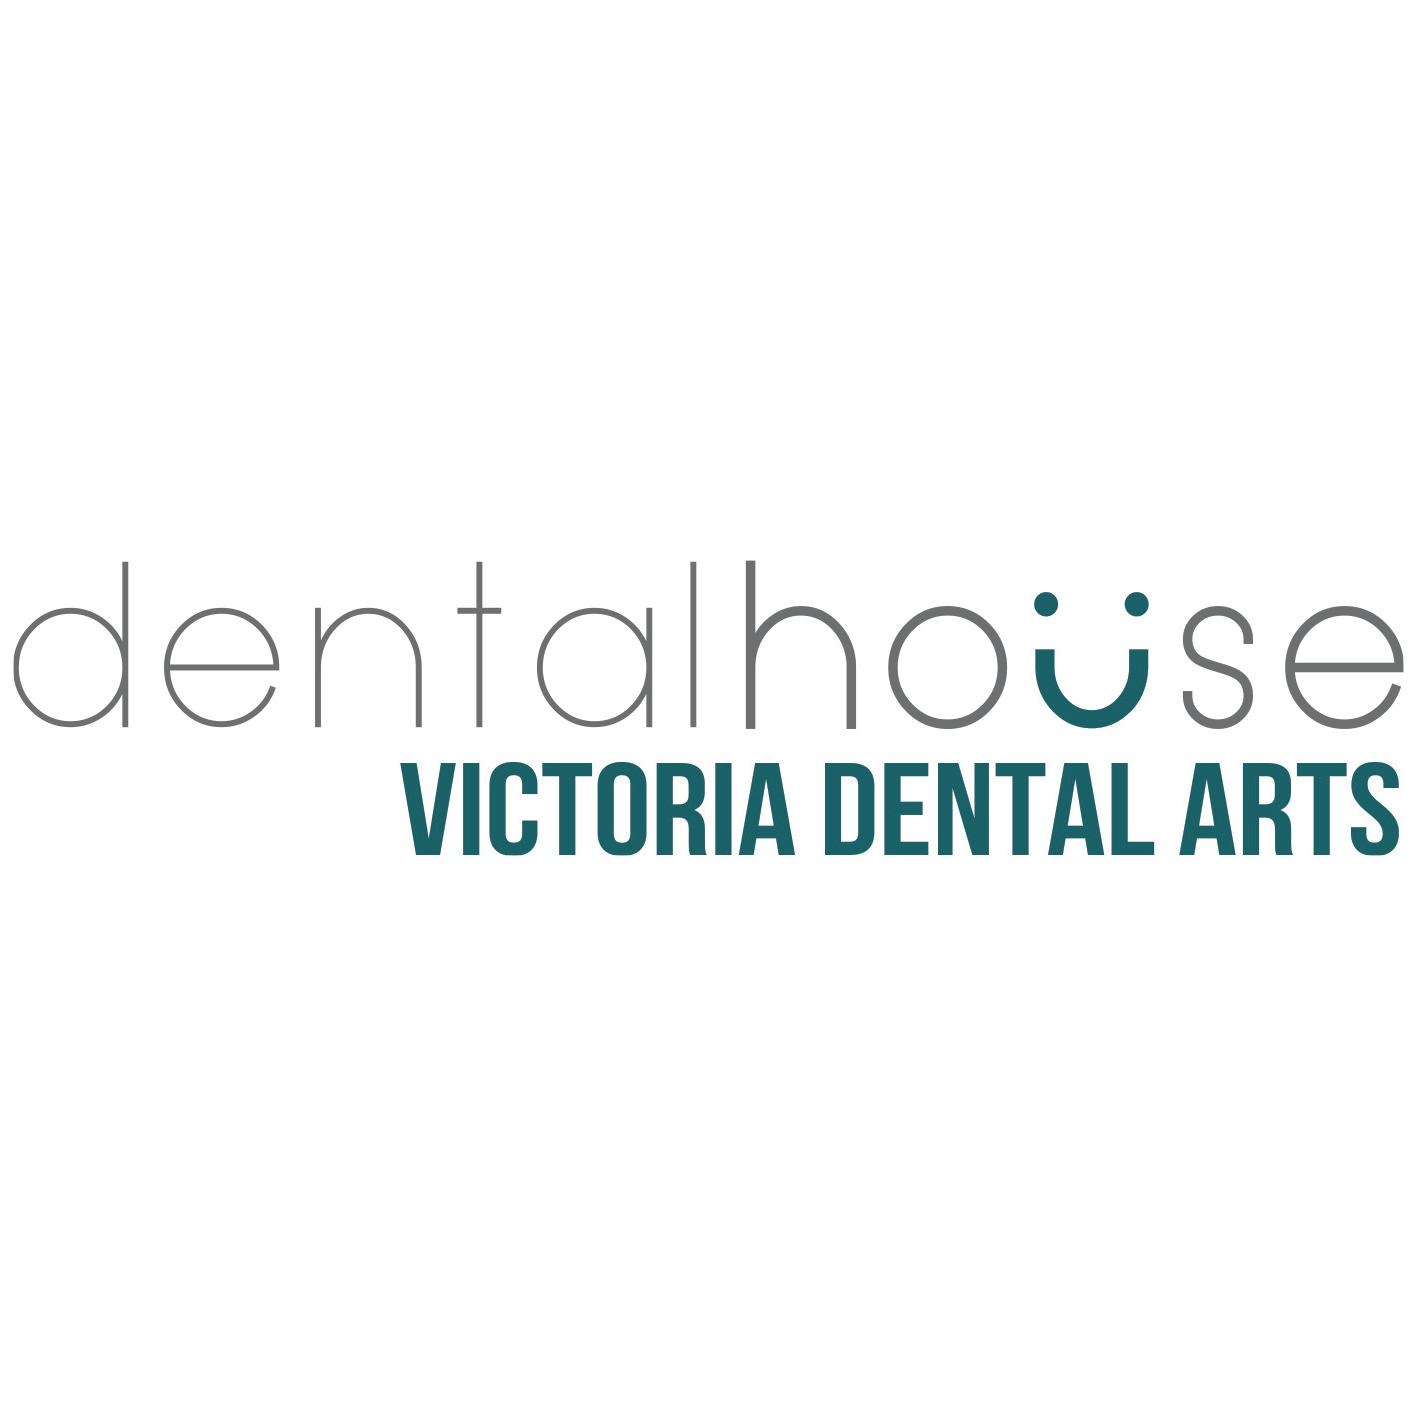 dentalhouse - Victoria Dental Arts